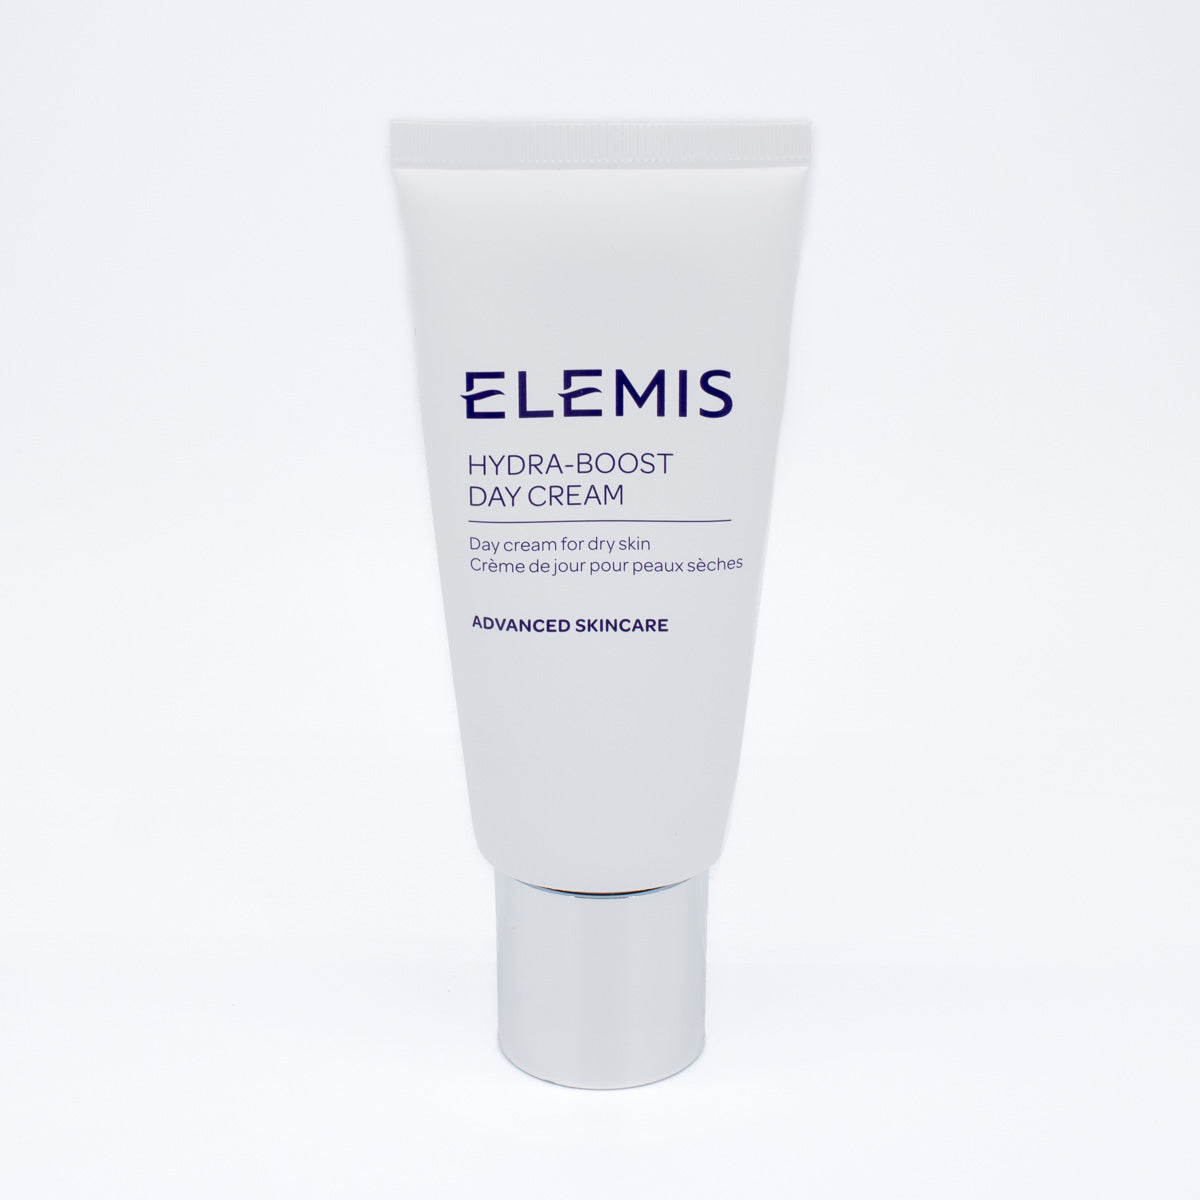 ELEMIS Hydra-Boost Day Cream 1.6oz - Imperfect Box